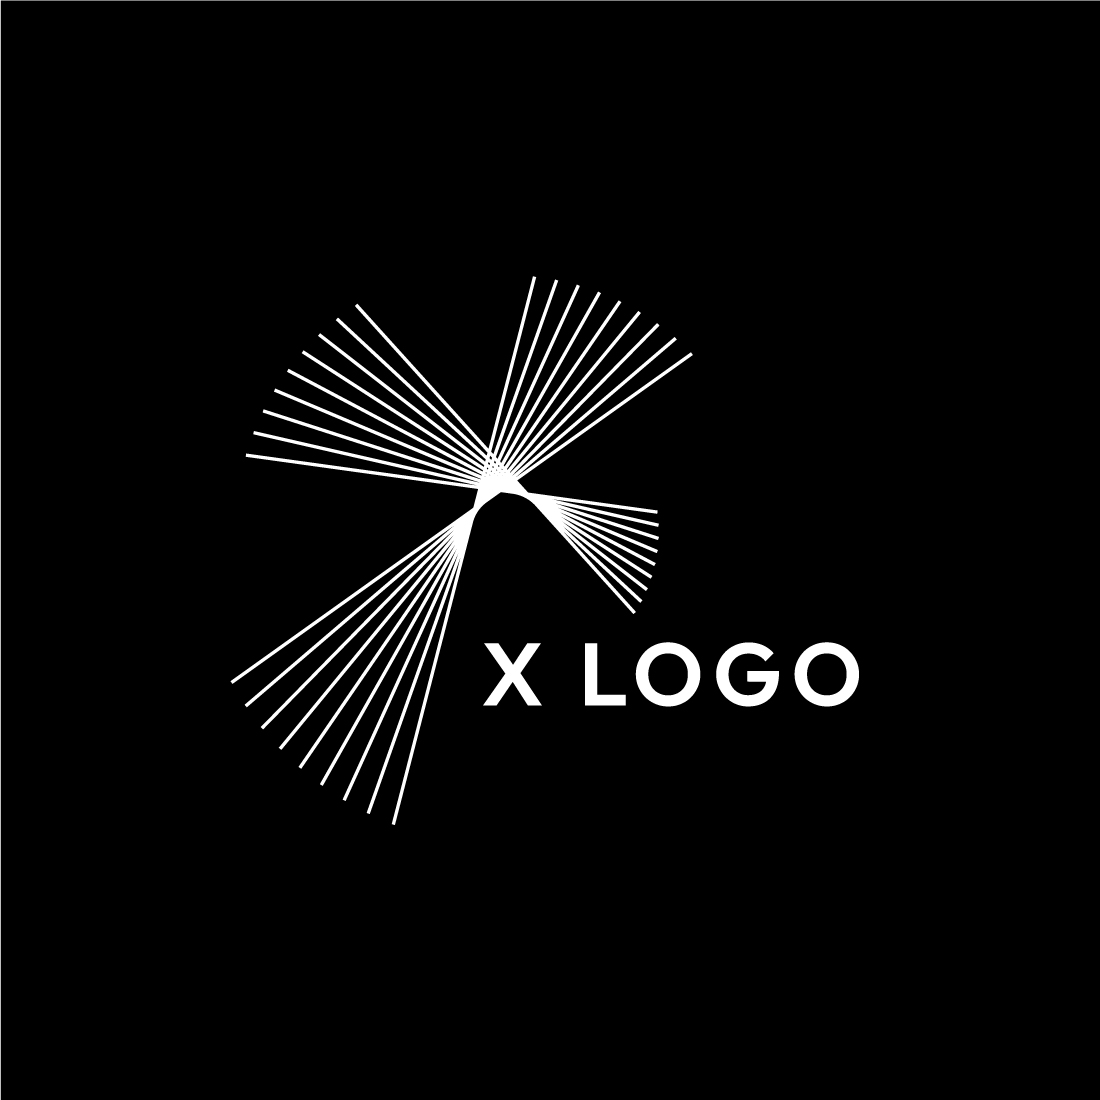 Minimalist Line Art Letter X Logo Design preview image.